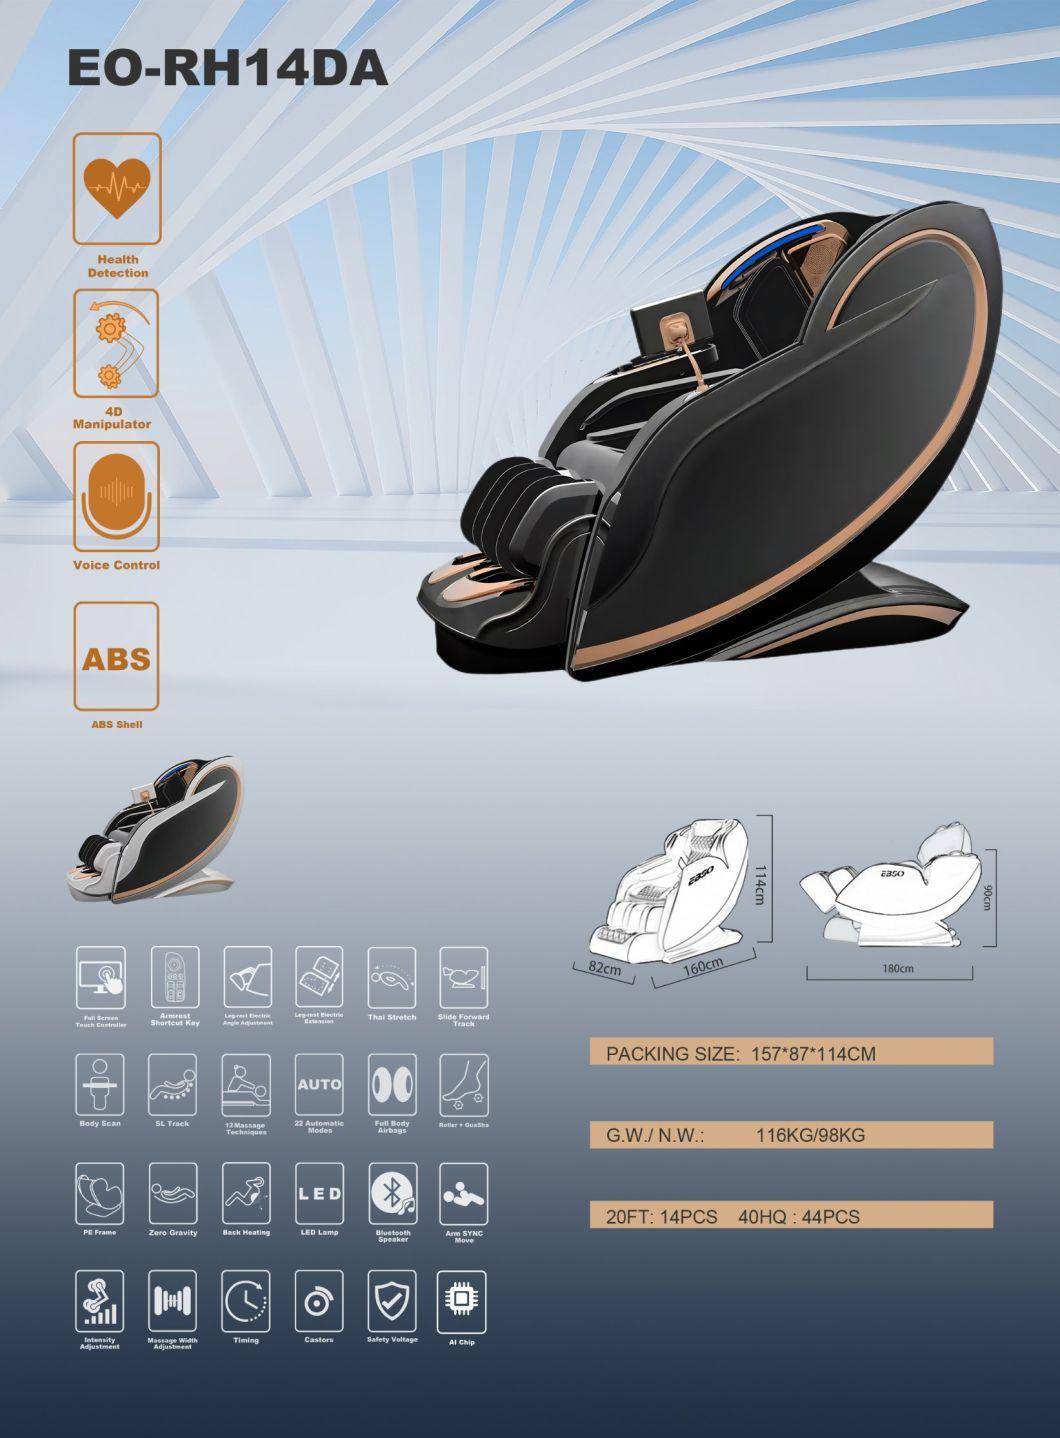 4D Massage Chair with Al Voice Hot Massage New Model